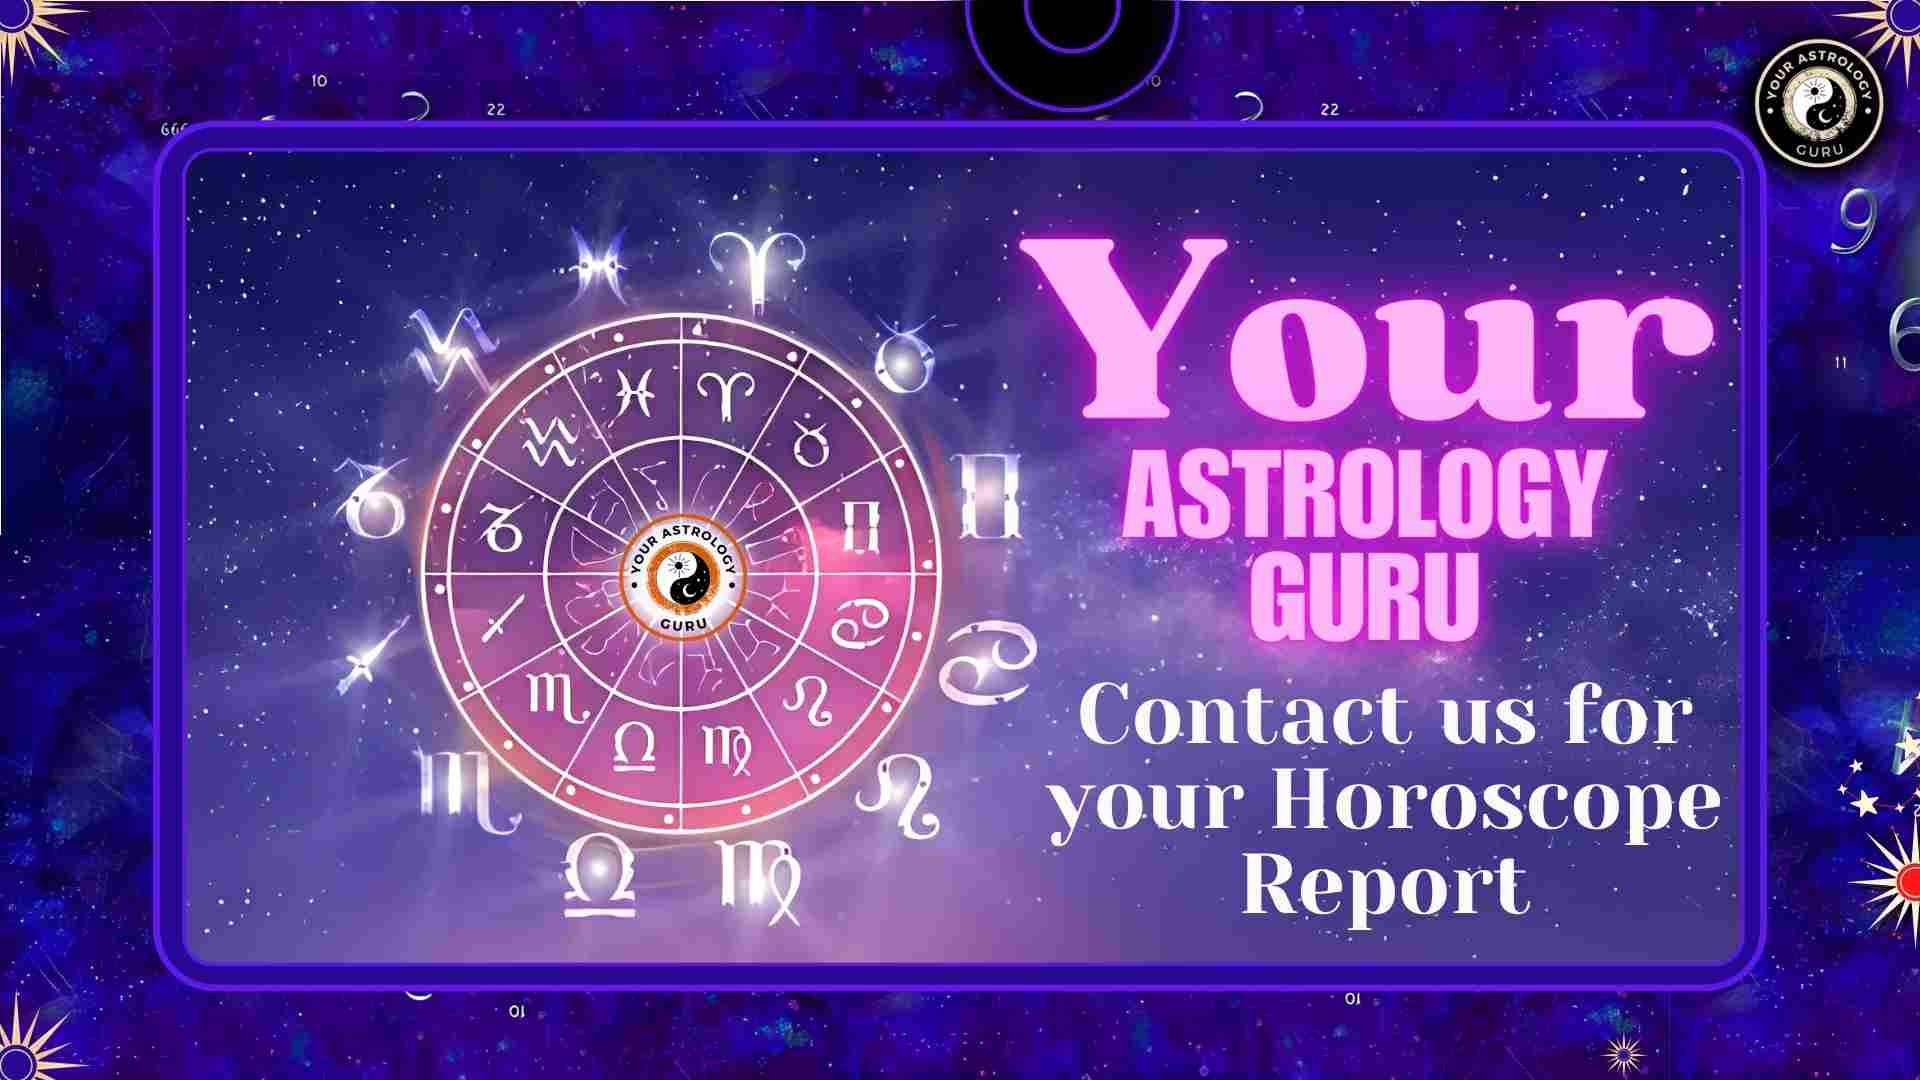 Your-Astrology-Guru-Post-Demo-1920-x-1080-px-16-4.jpg